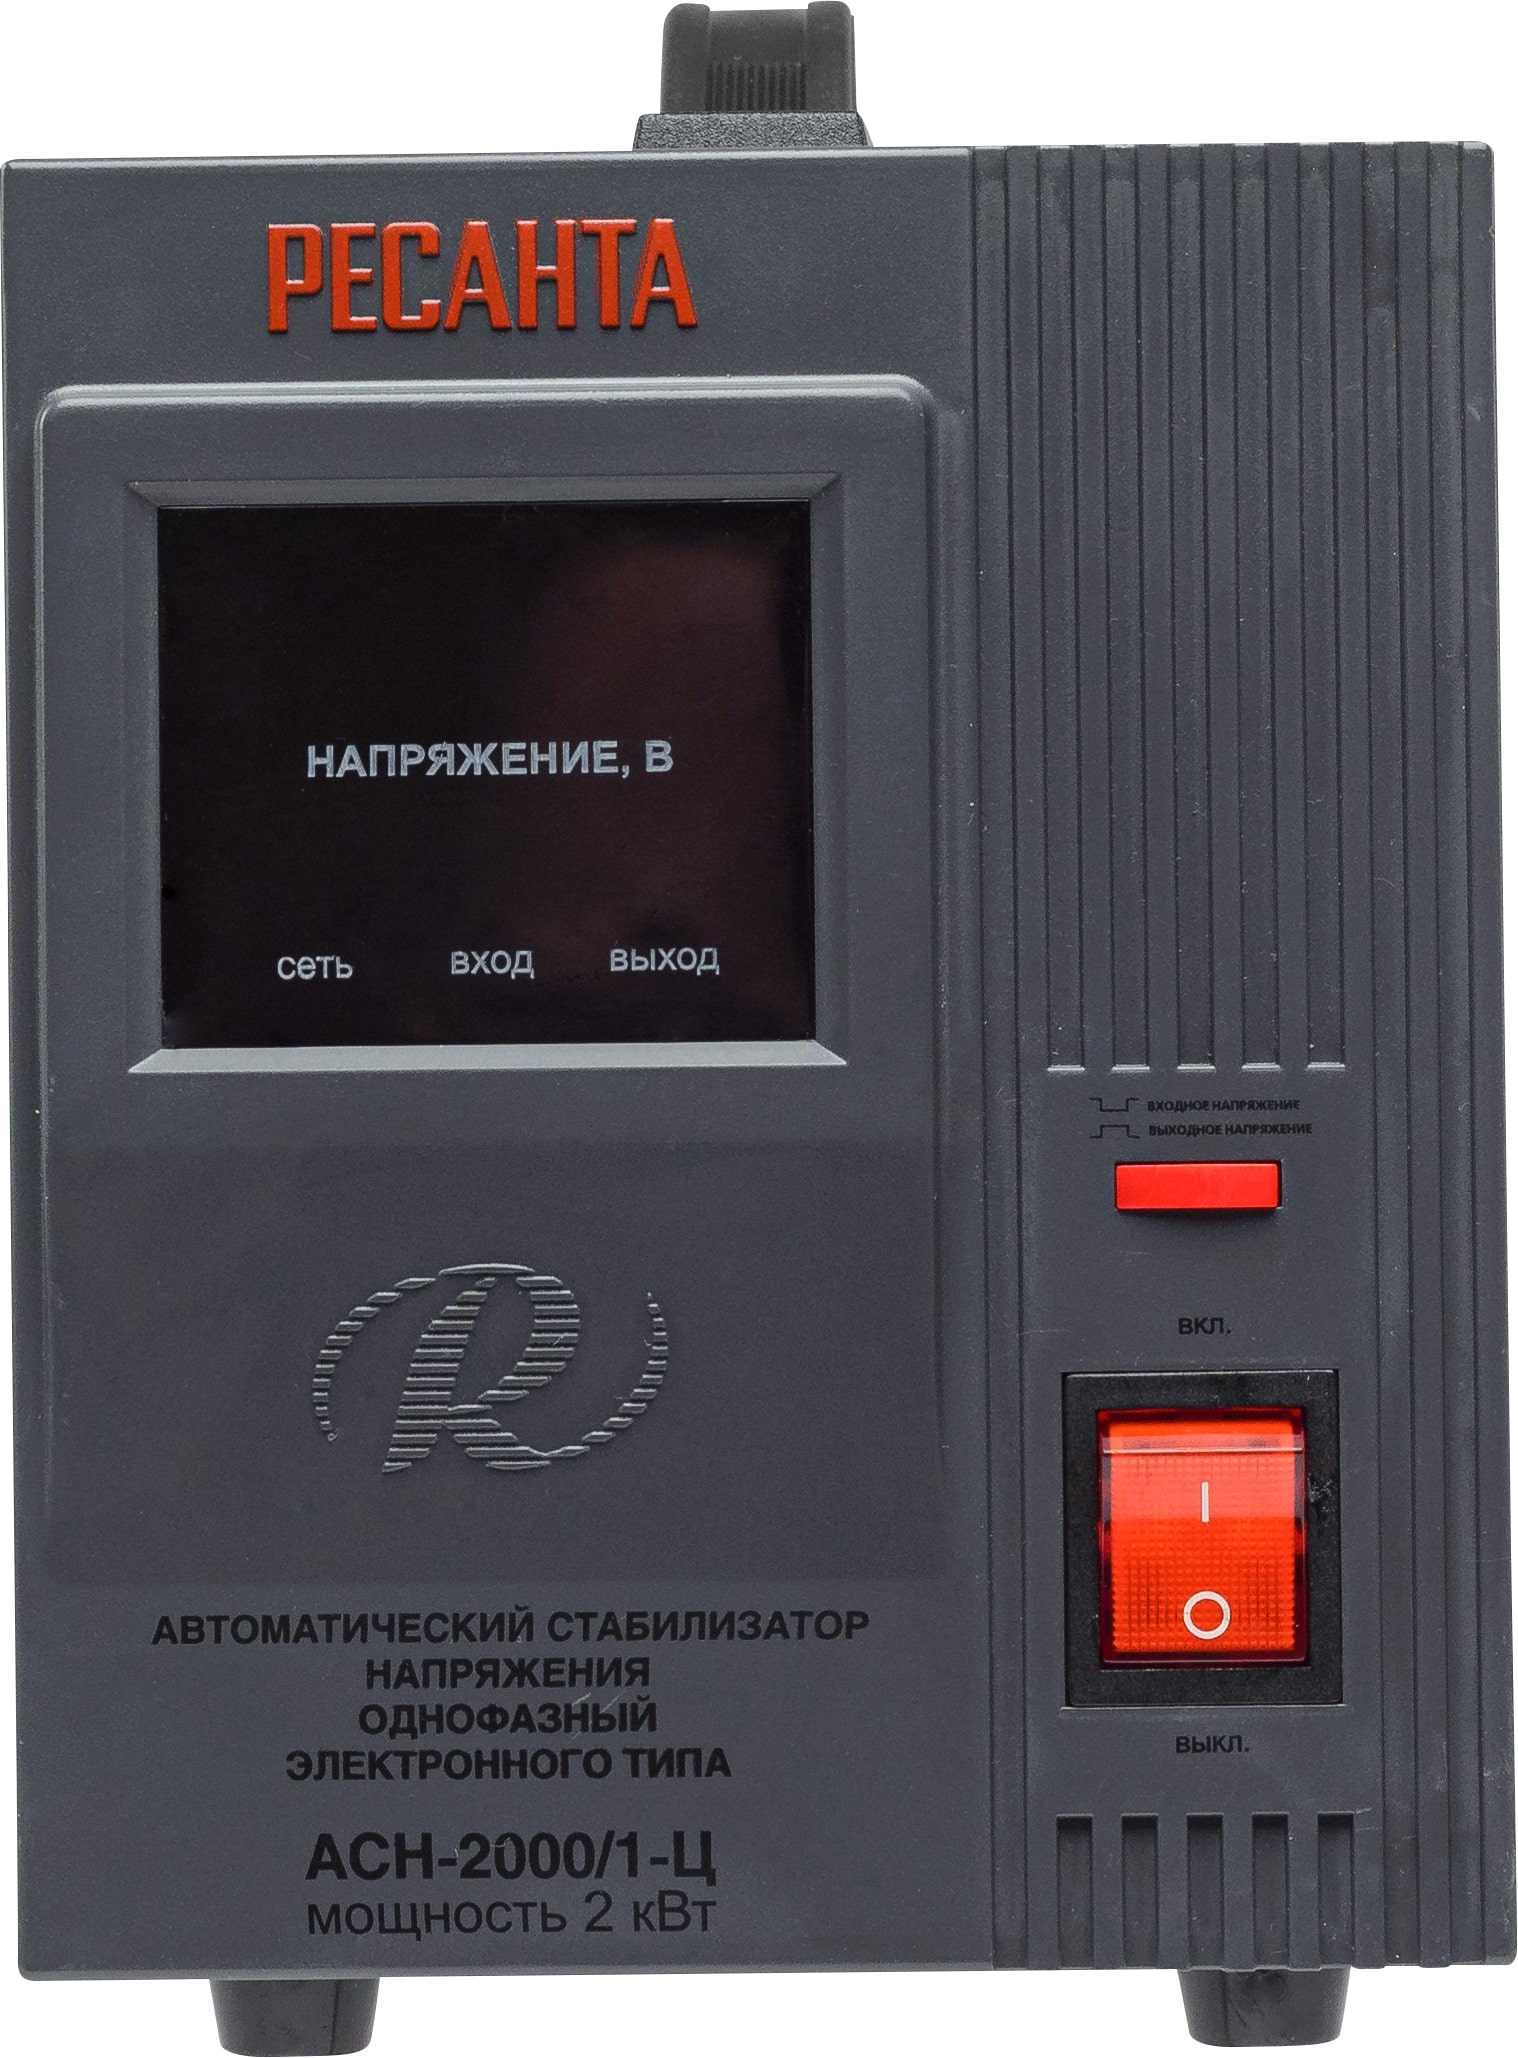 Однофазный стабилизатор Ресанта АСН-2000/1-Ц